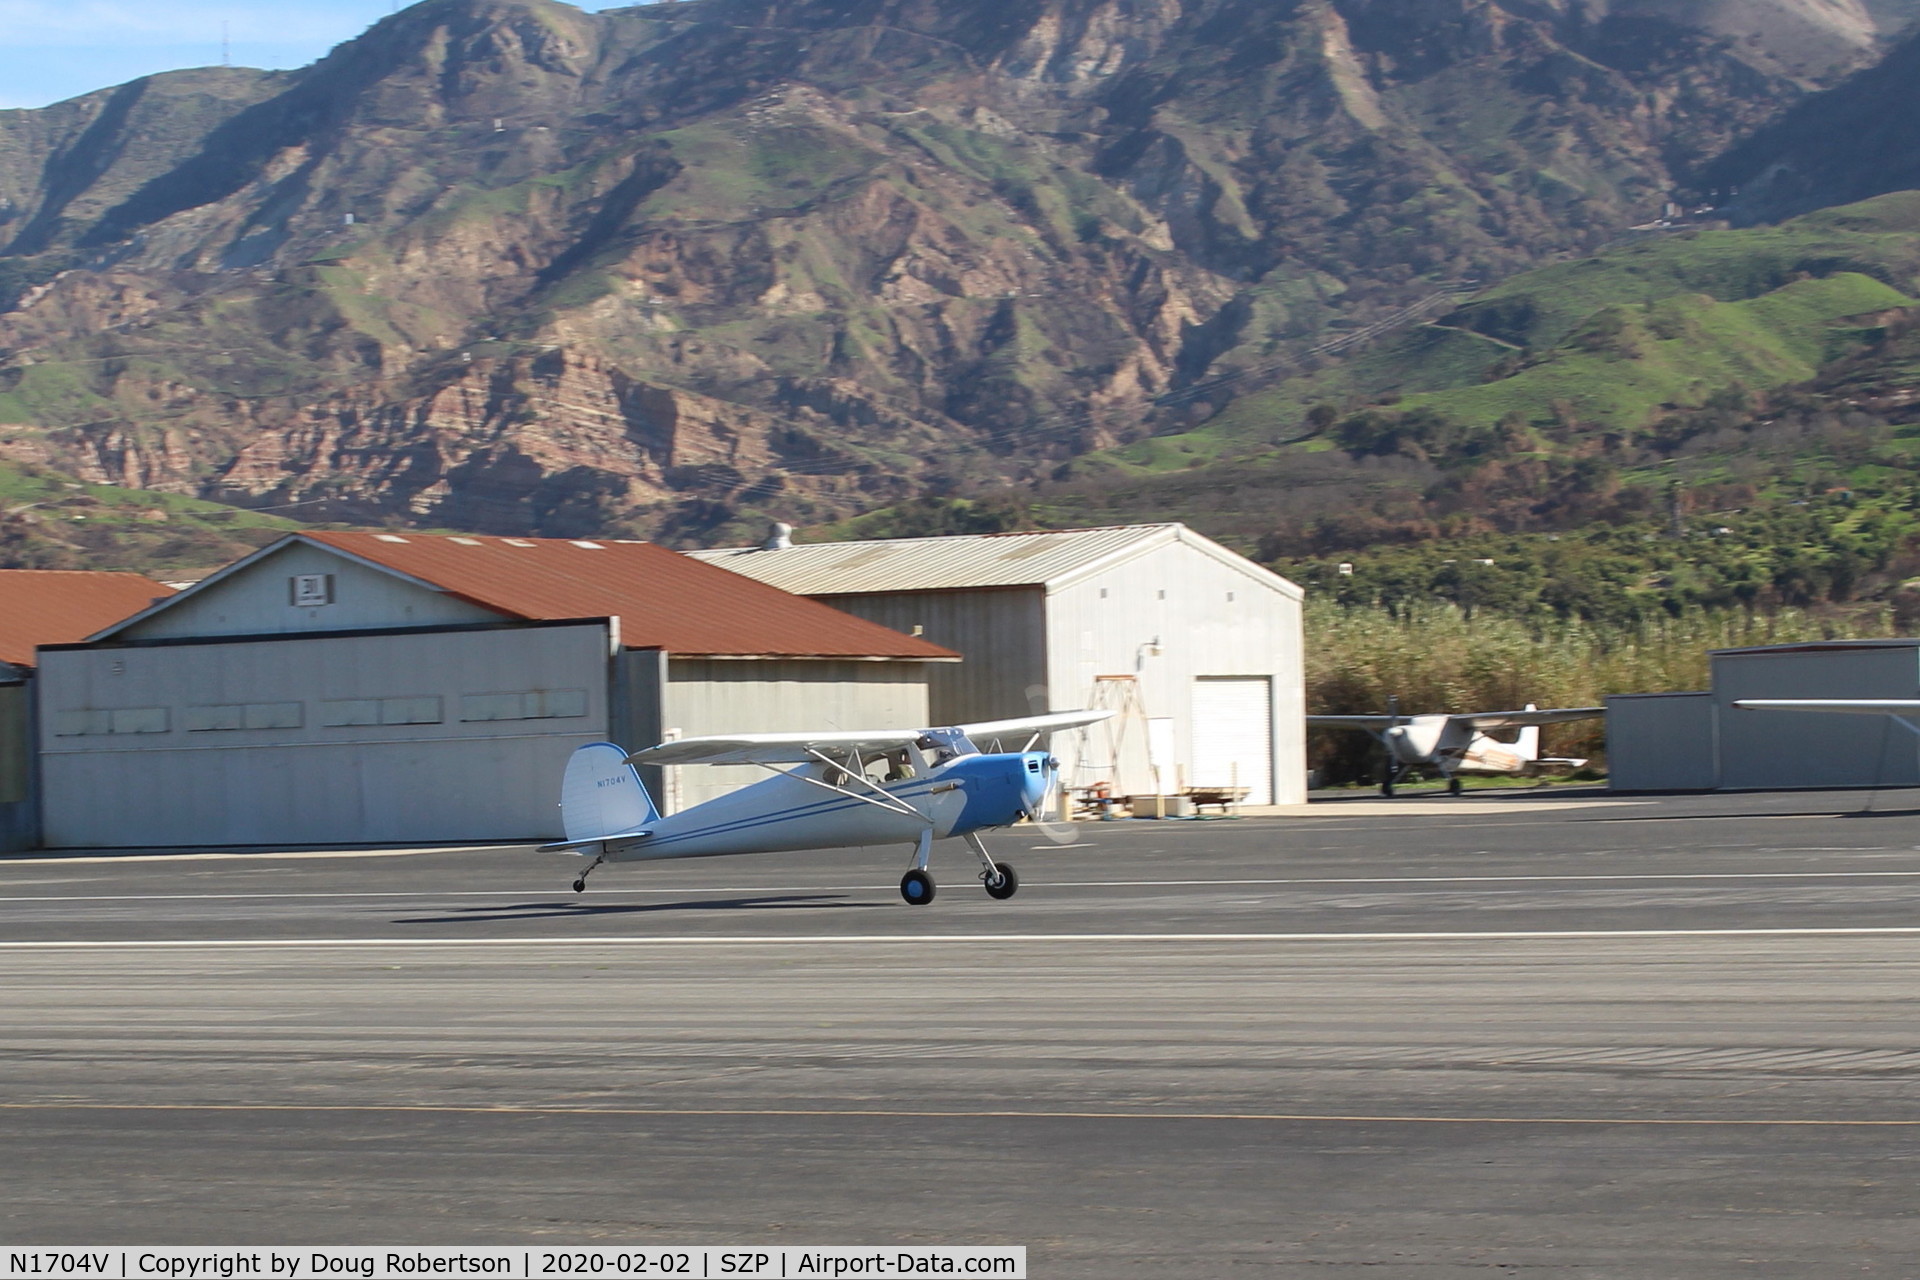 N1704V, Cessna 140 C/N 13889, 1948 Cessna 140, Continental C-85-12 85 Hp, liftoff Rwy 22